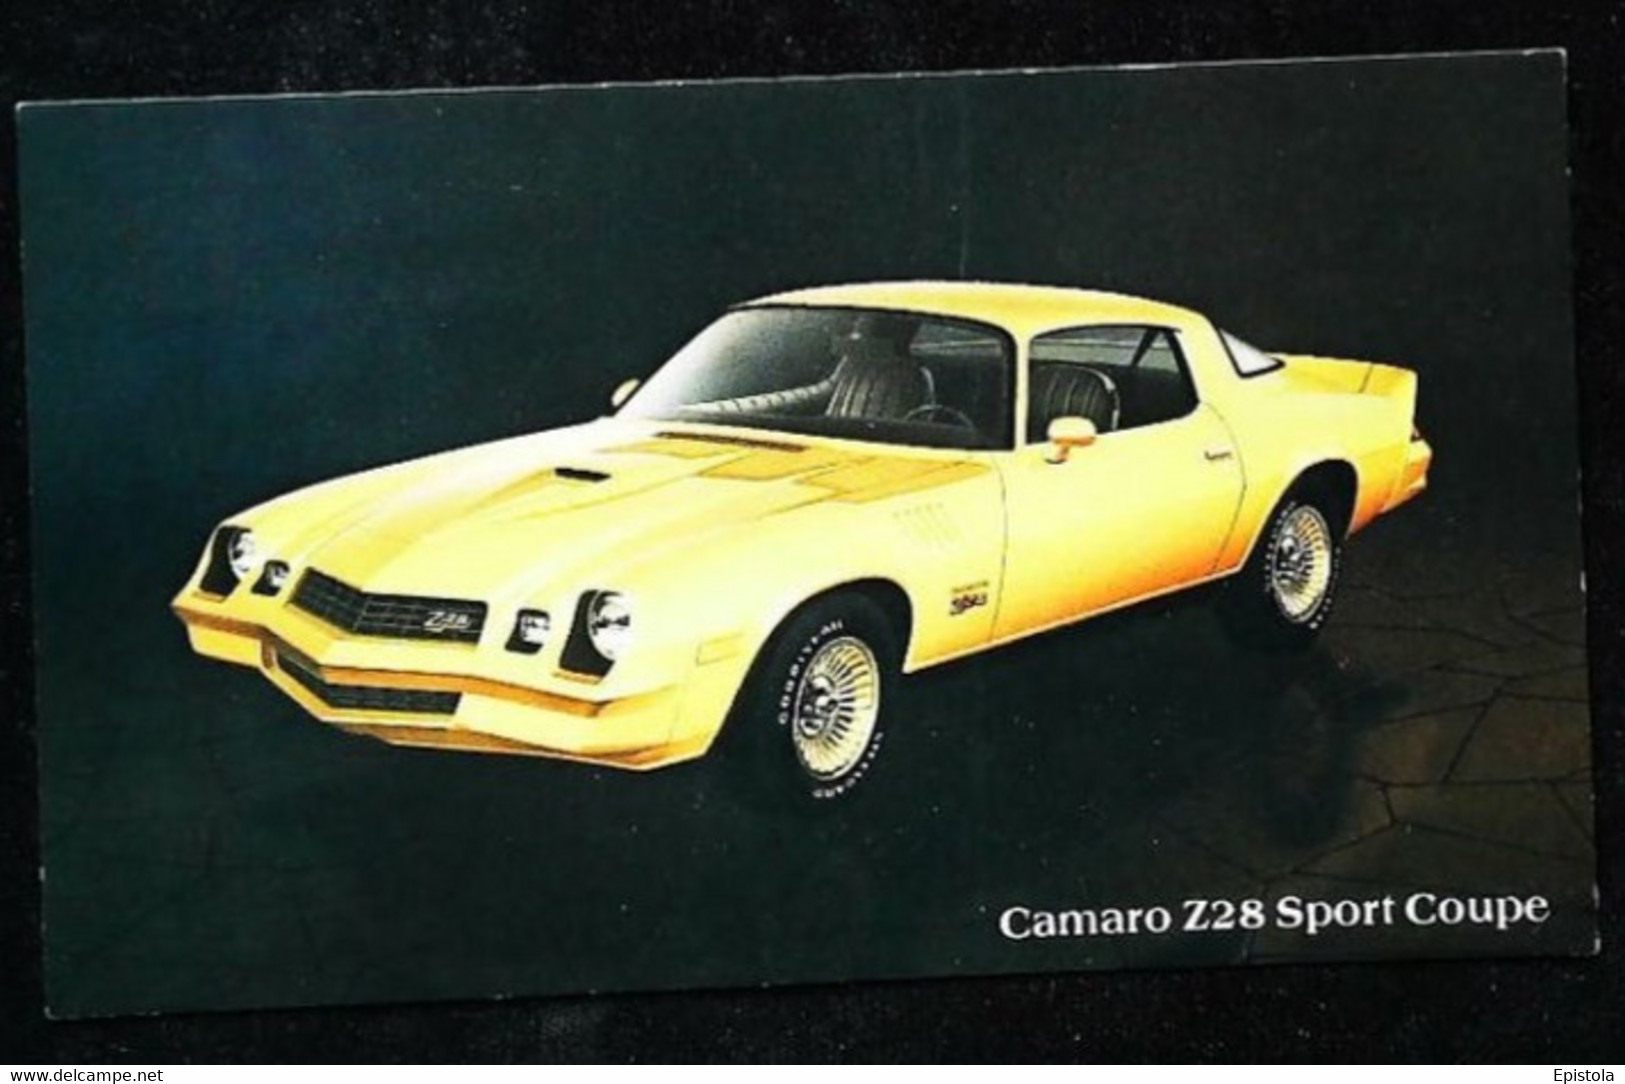 ► CAMARO Z28 Sport Coupe 1978 - Publicité Automobile Américaine (Litho. U.S.A.) - Roadside - American Roadside